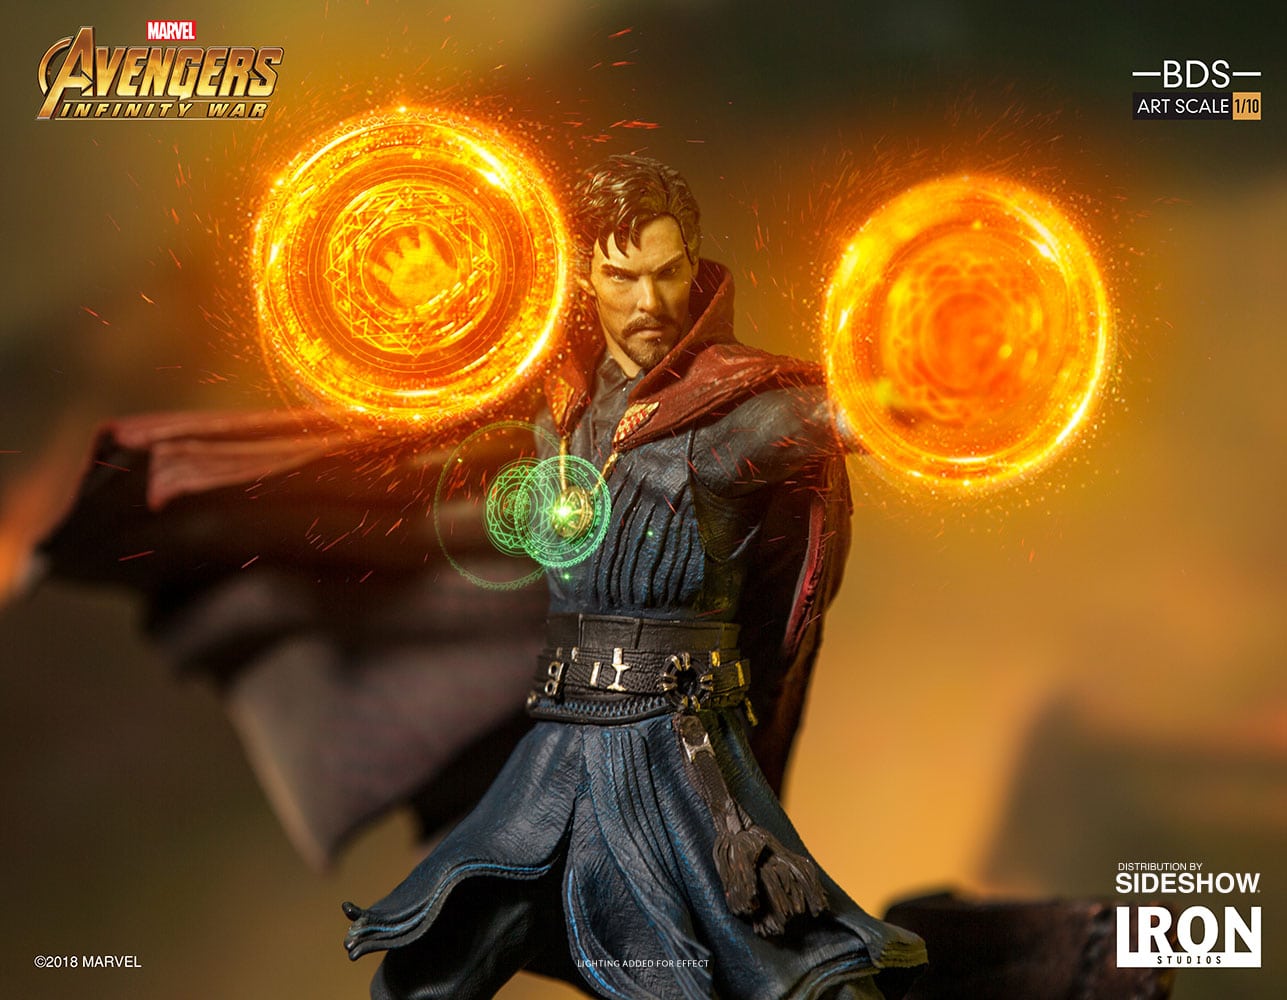 Avengers de Iron Studios: Infinity War Battle Diorama Series Doctor Strange disponible para reservar ahora